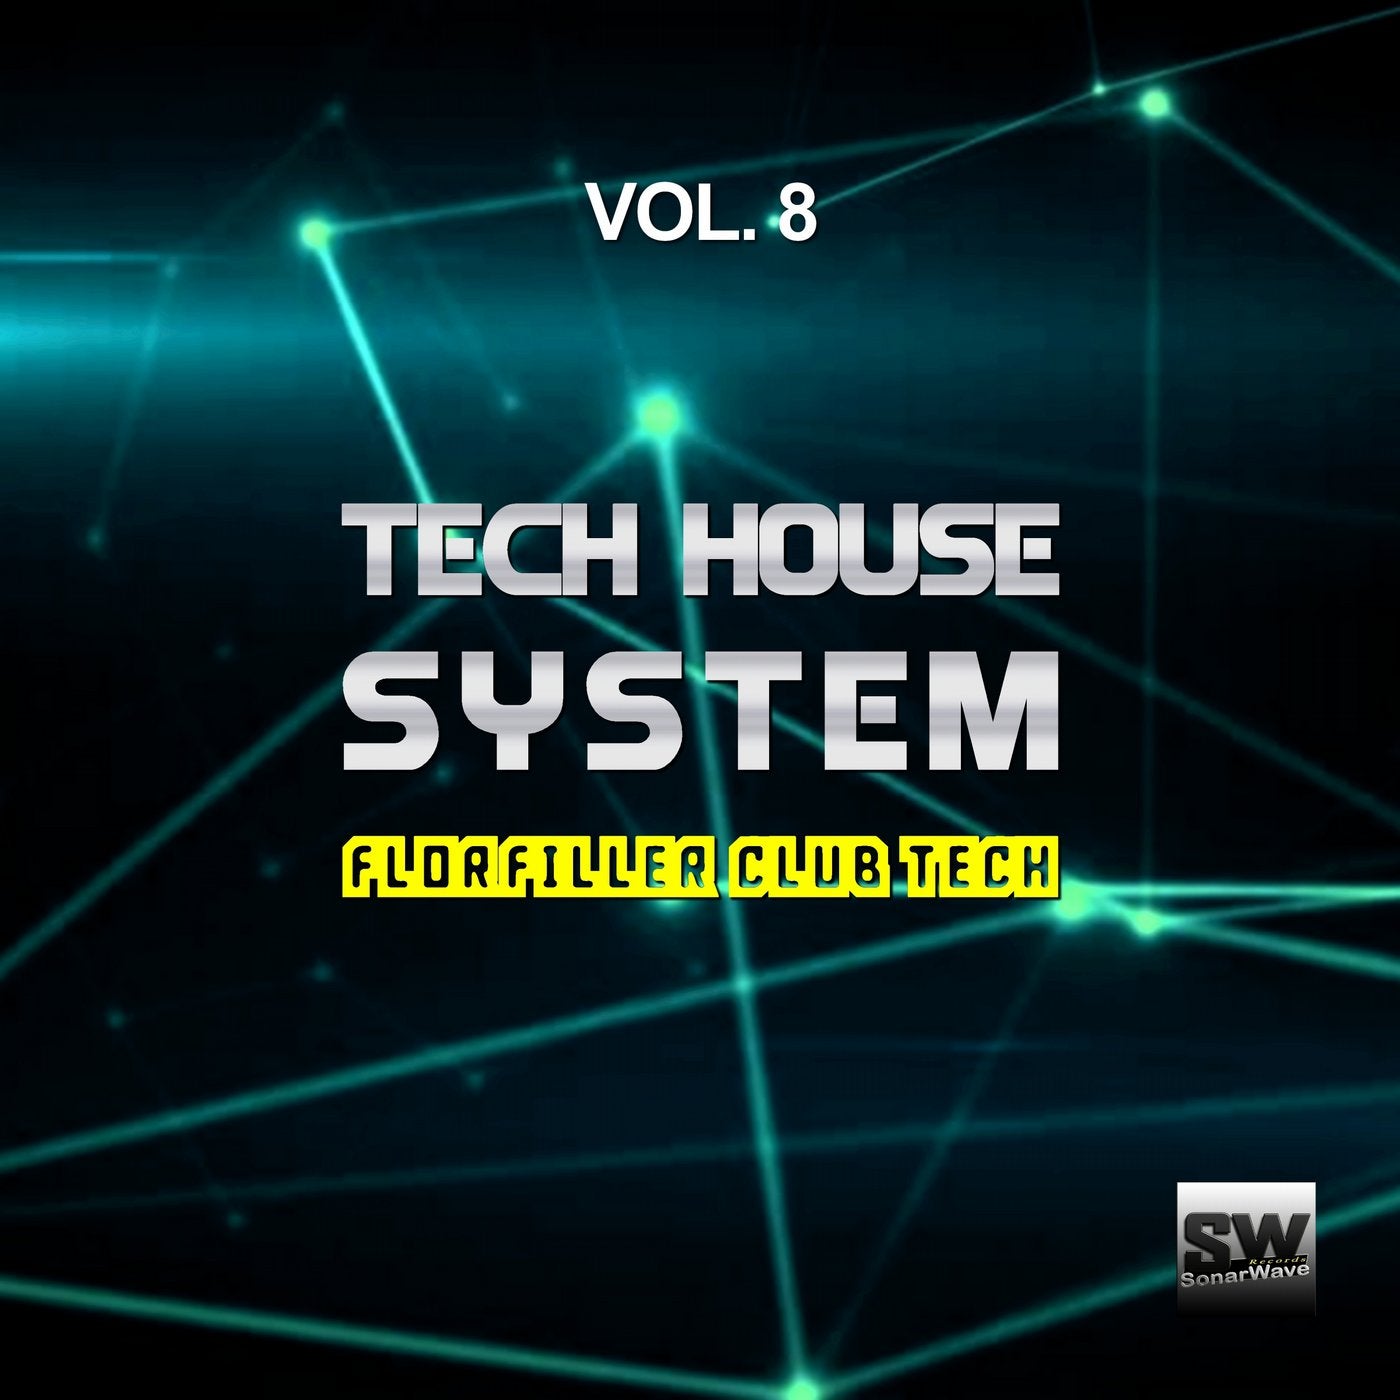 Tech House System, Vol. 8 (Floorfiller Club Tech)